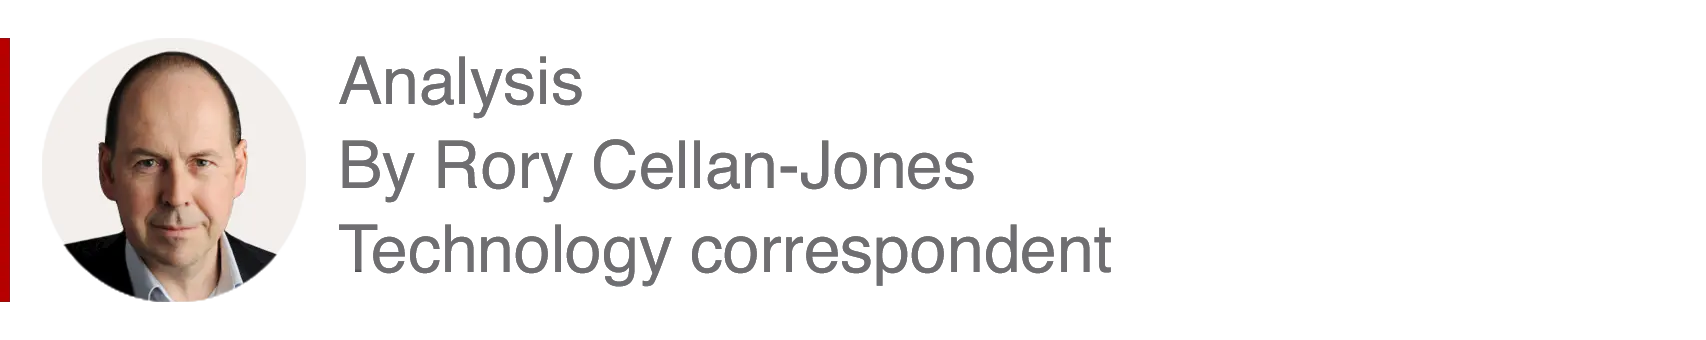 Analysis box by Rory Cellan-Jones, technology correspondent